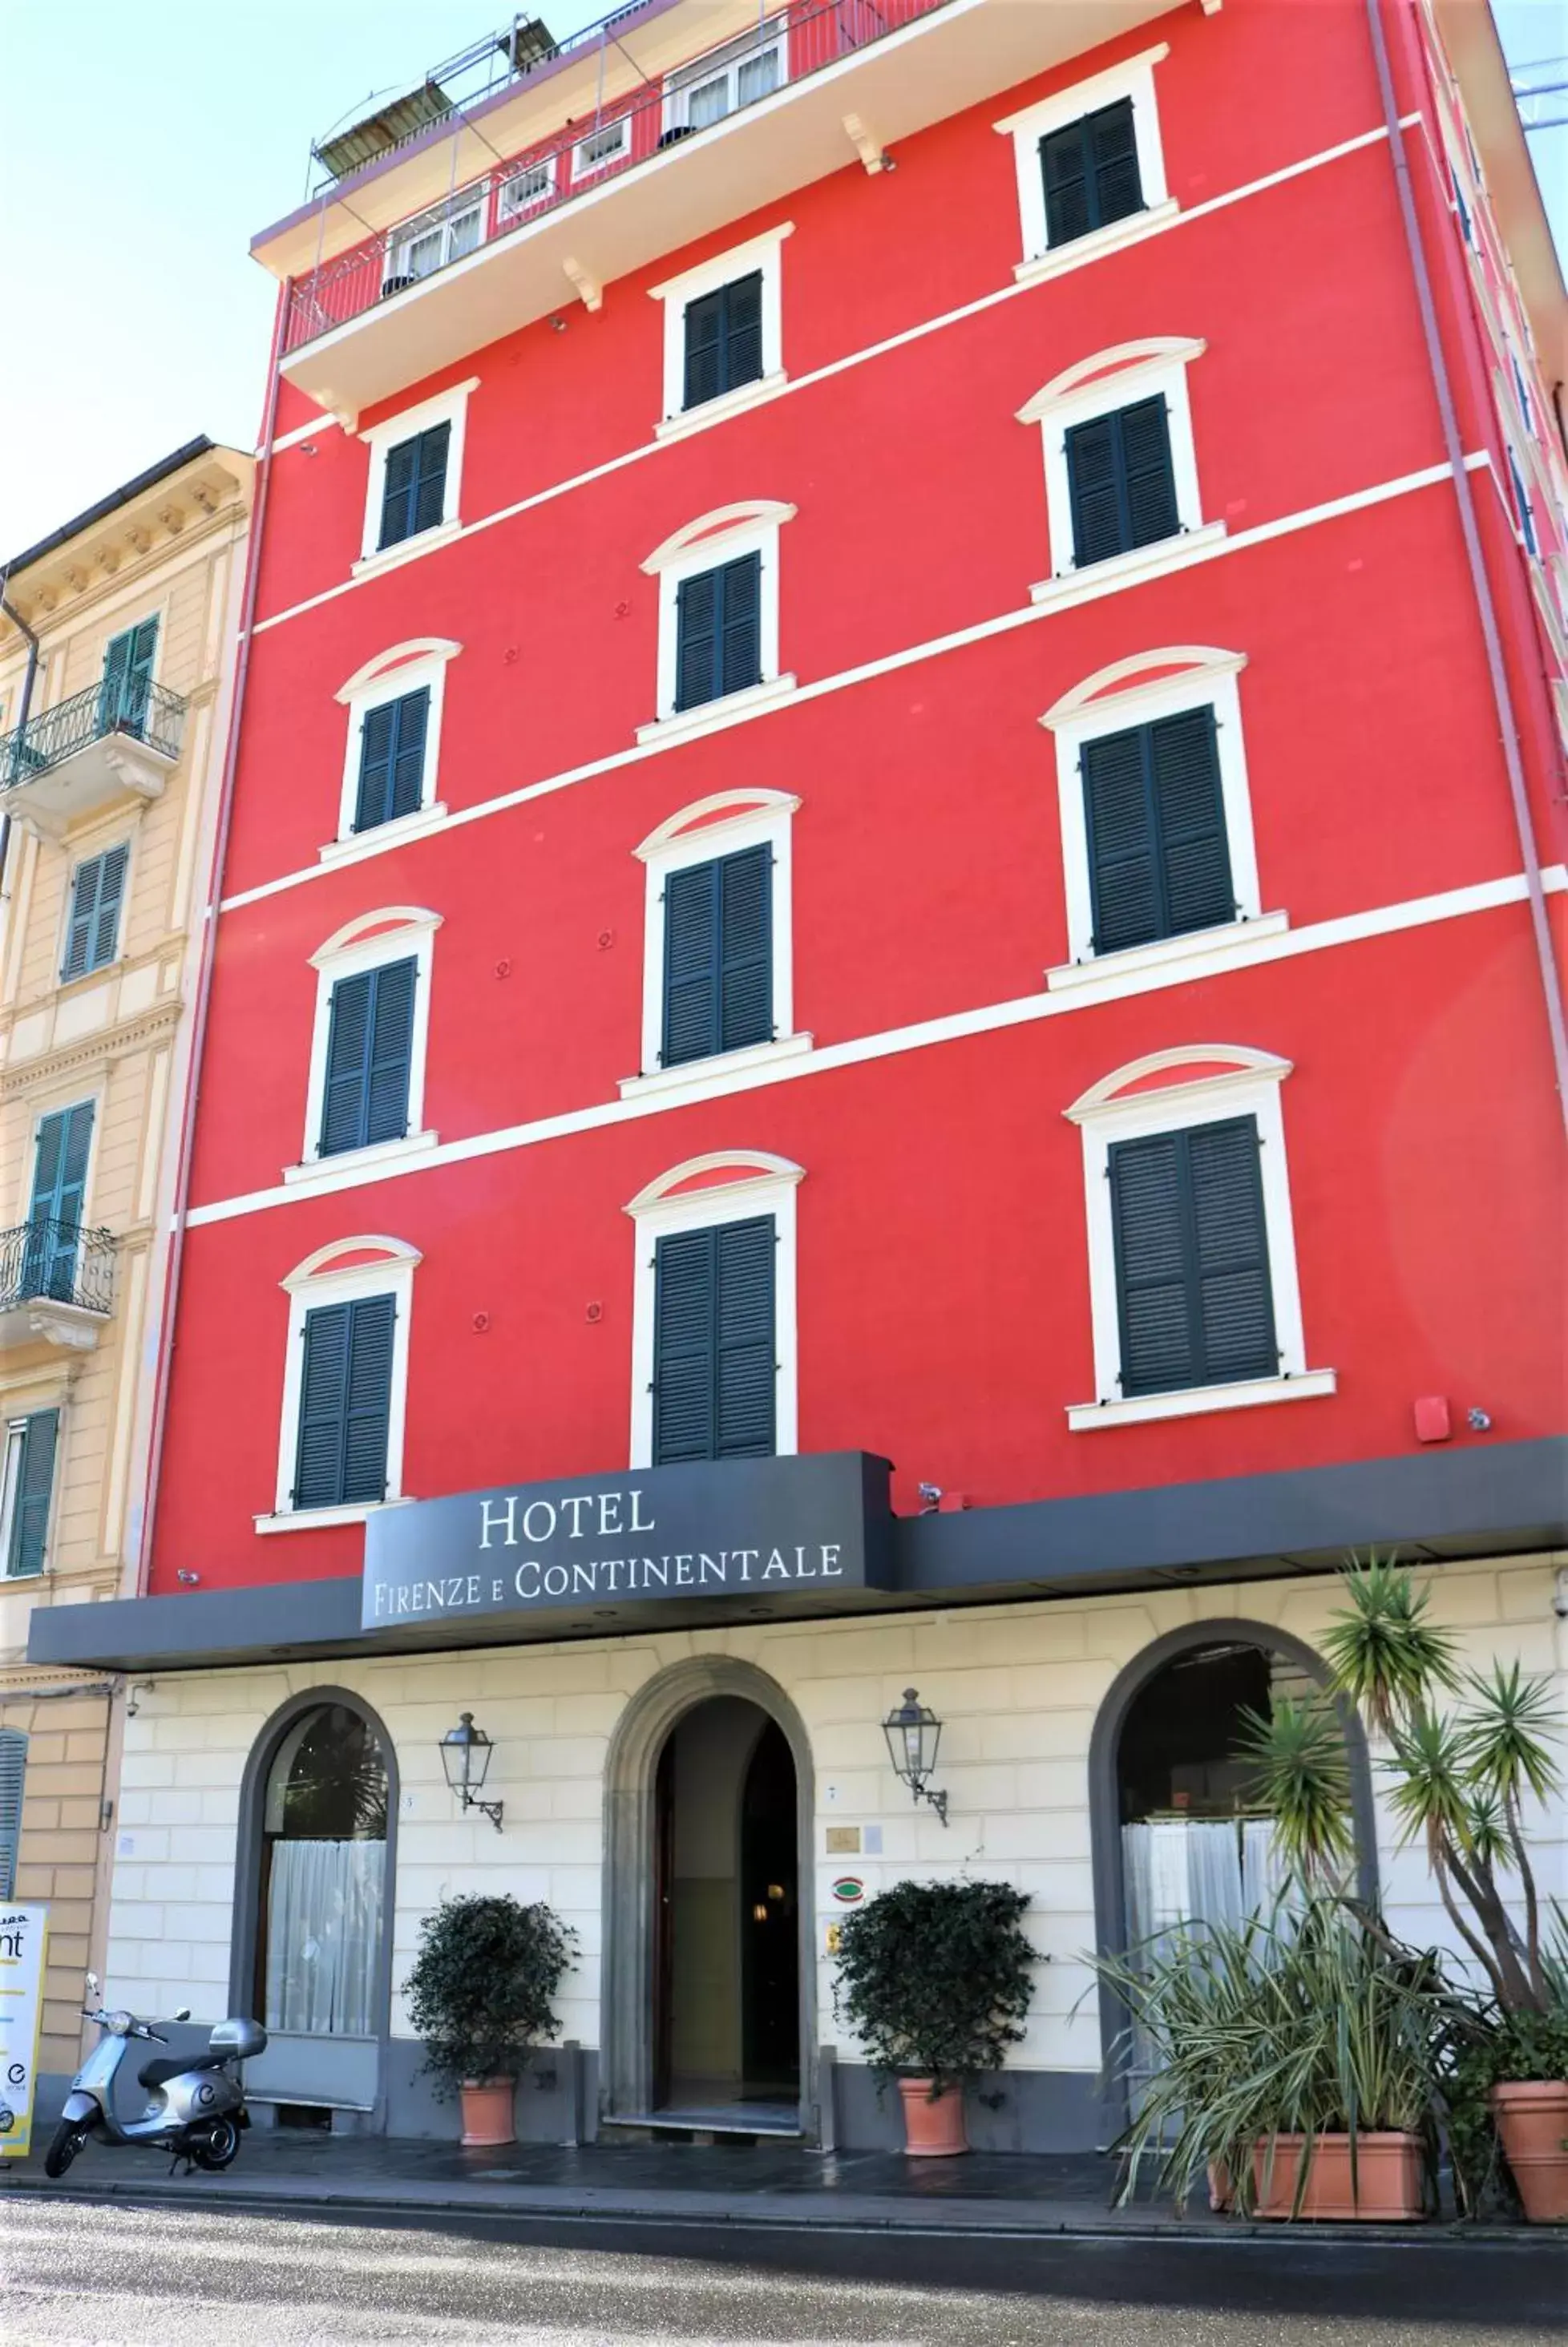 Property Building in Hotel Firenze e Continentale